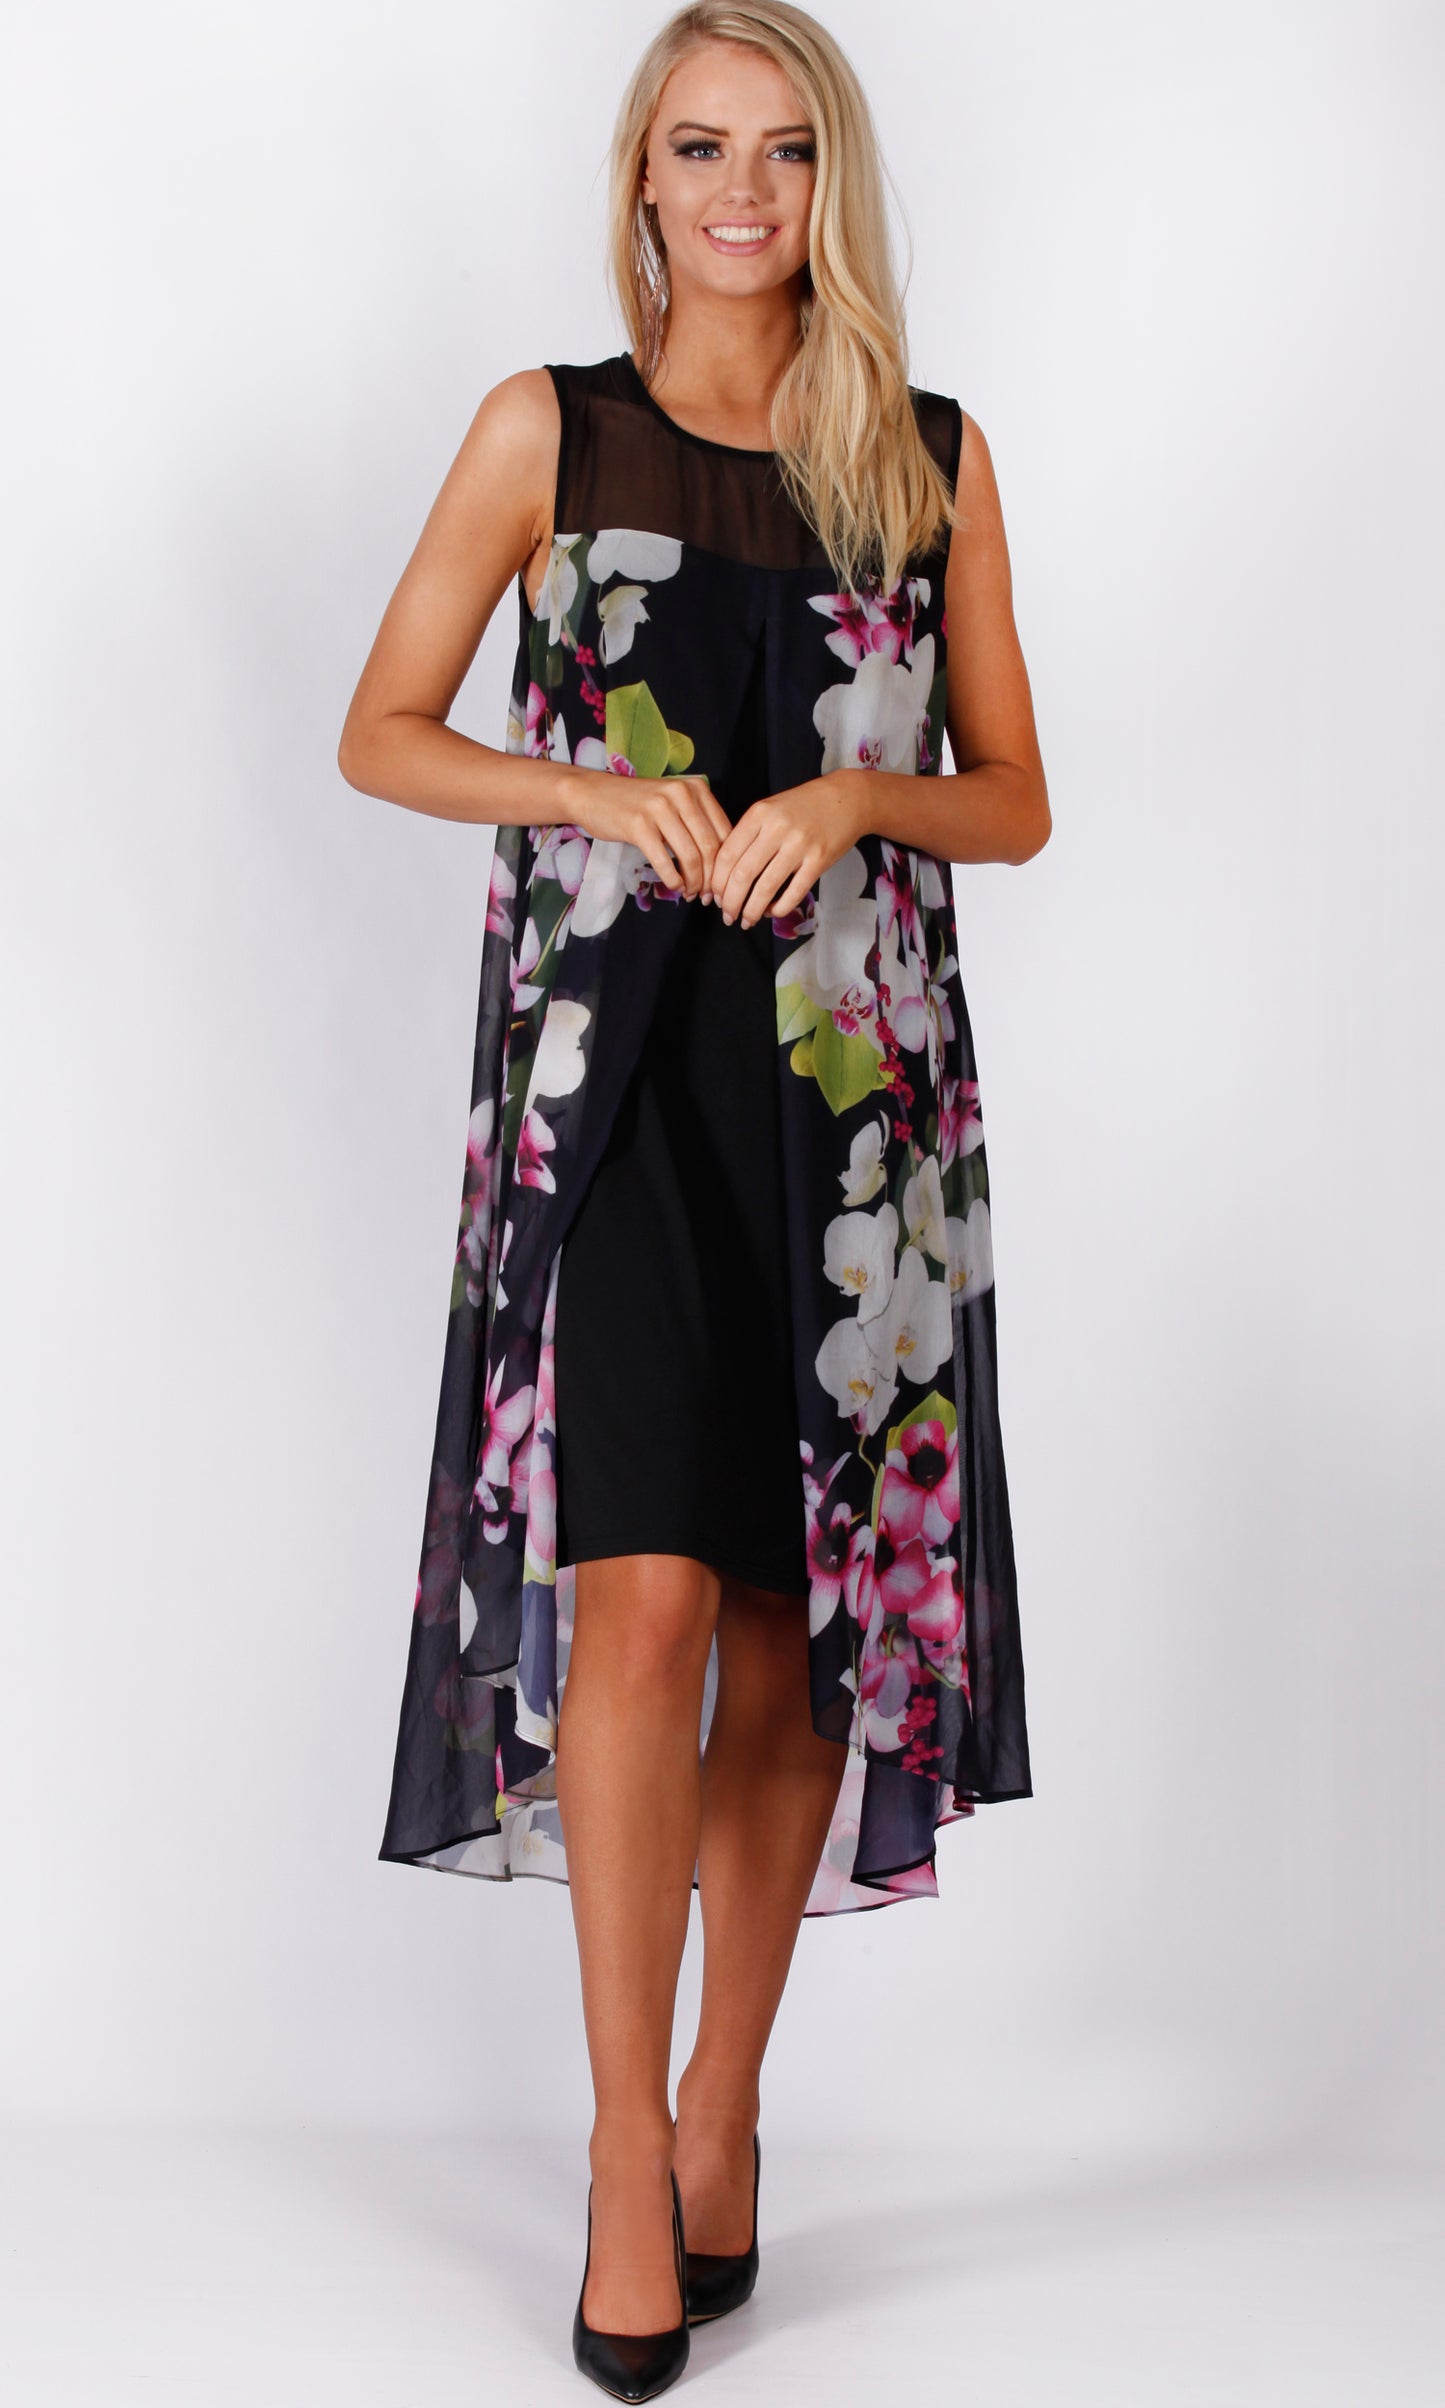 VS7179TB Sheer Floral Print Dress (Pack)